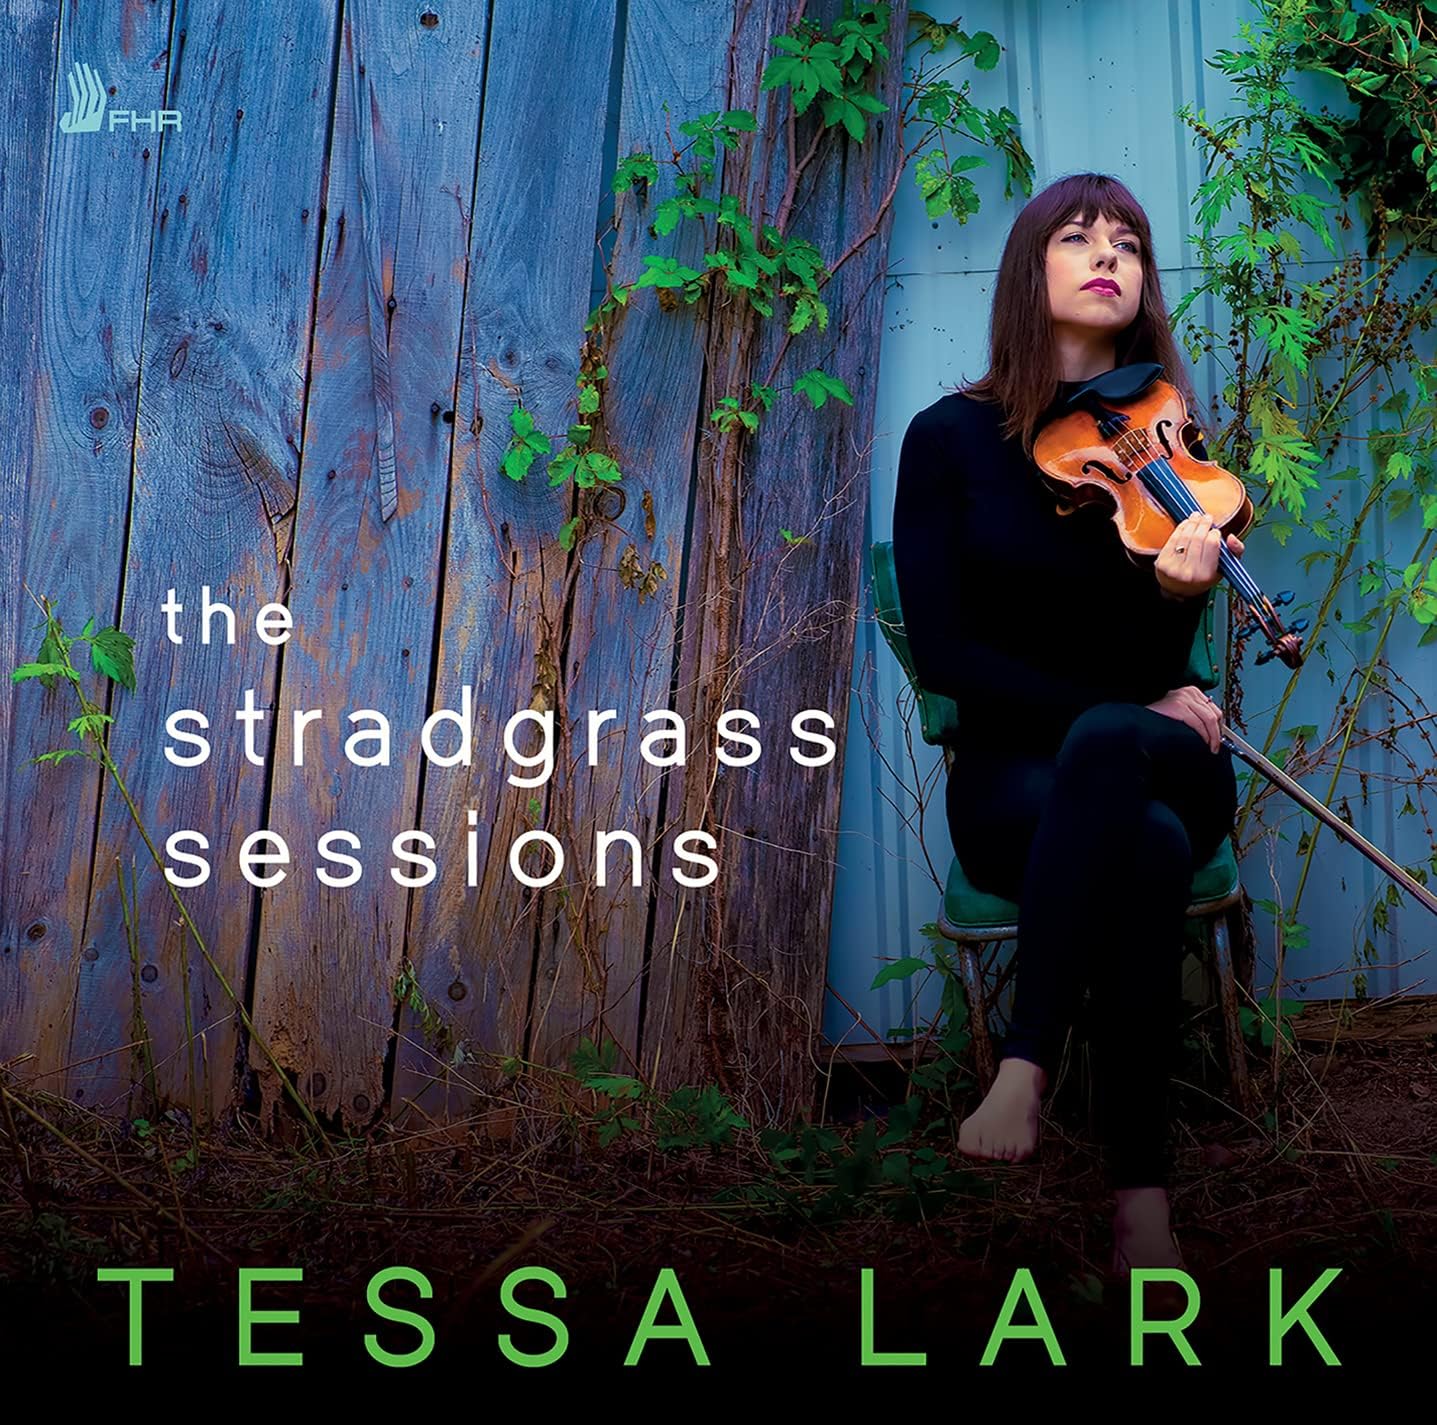 Tessa Lark stradgrass